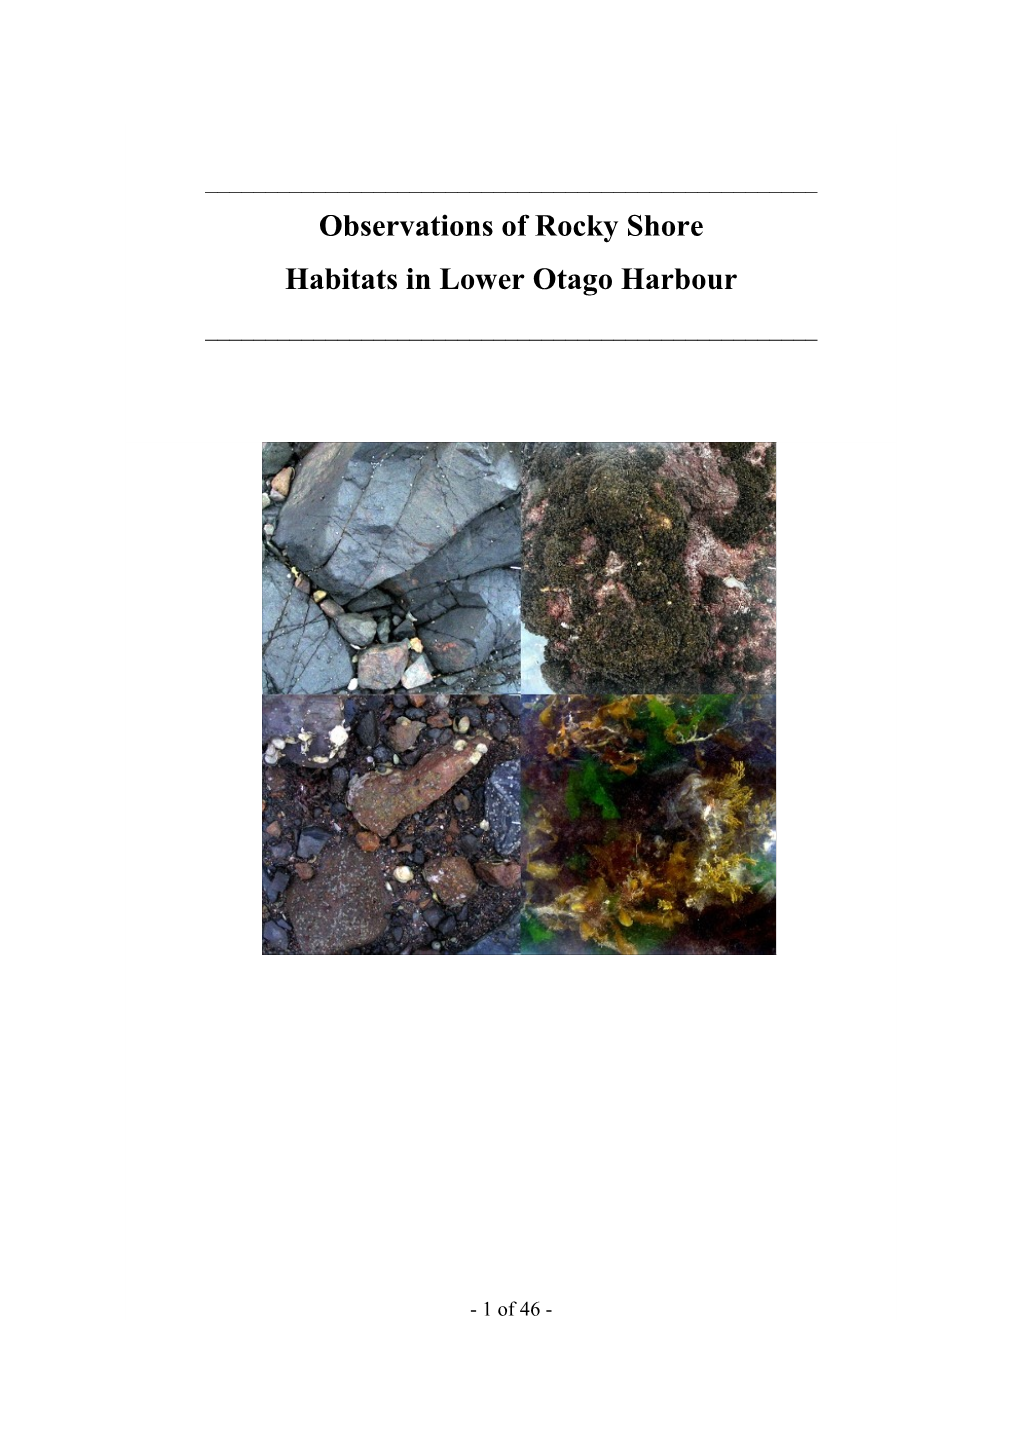 Observations of Rocky Shore Habitats in Lower Otago Harbour ______